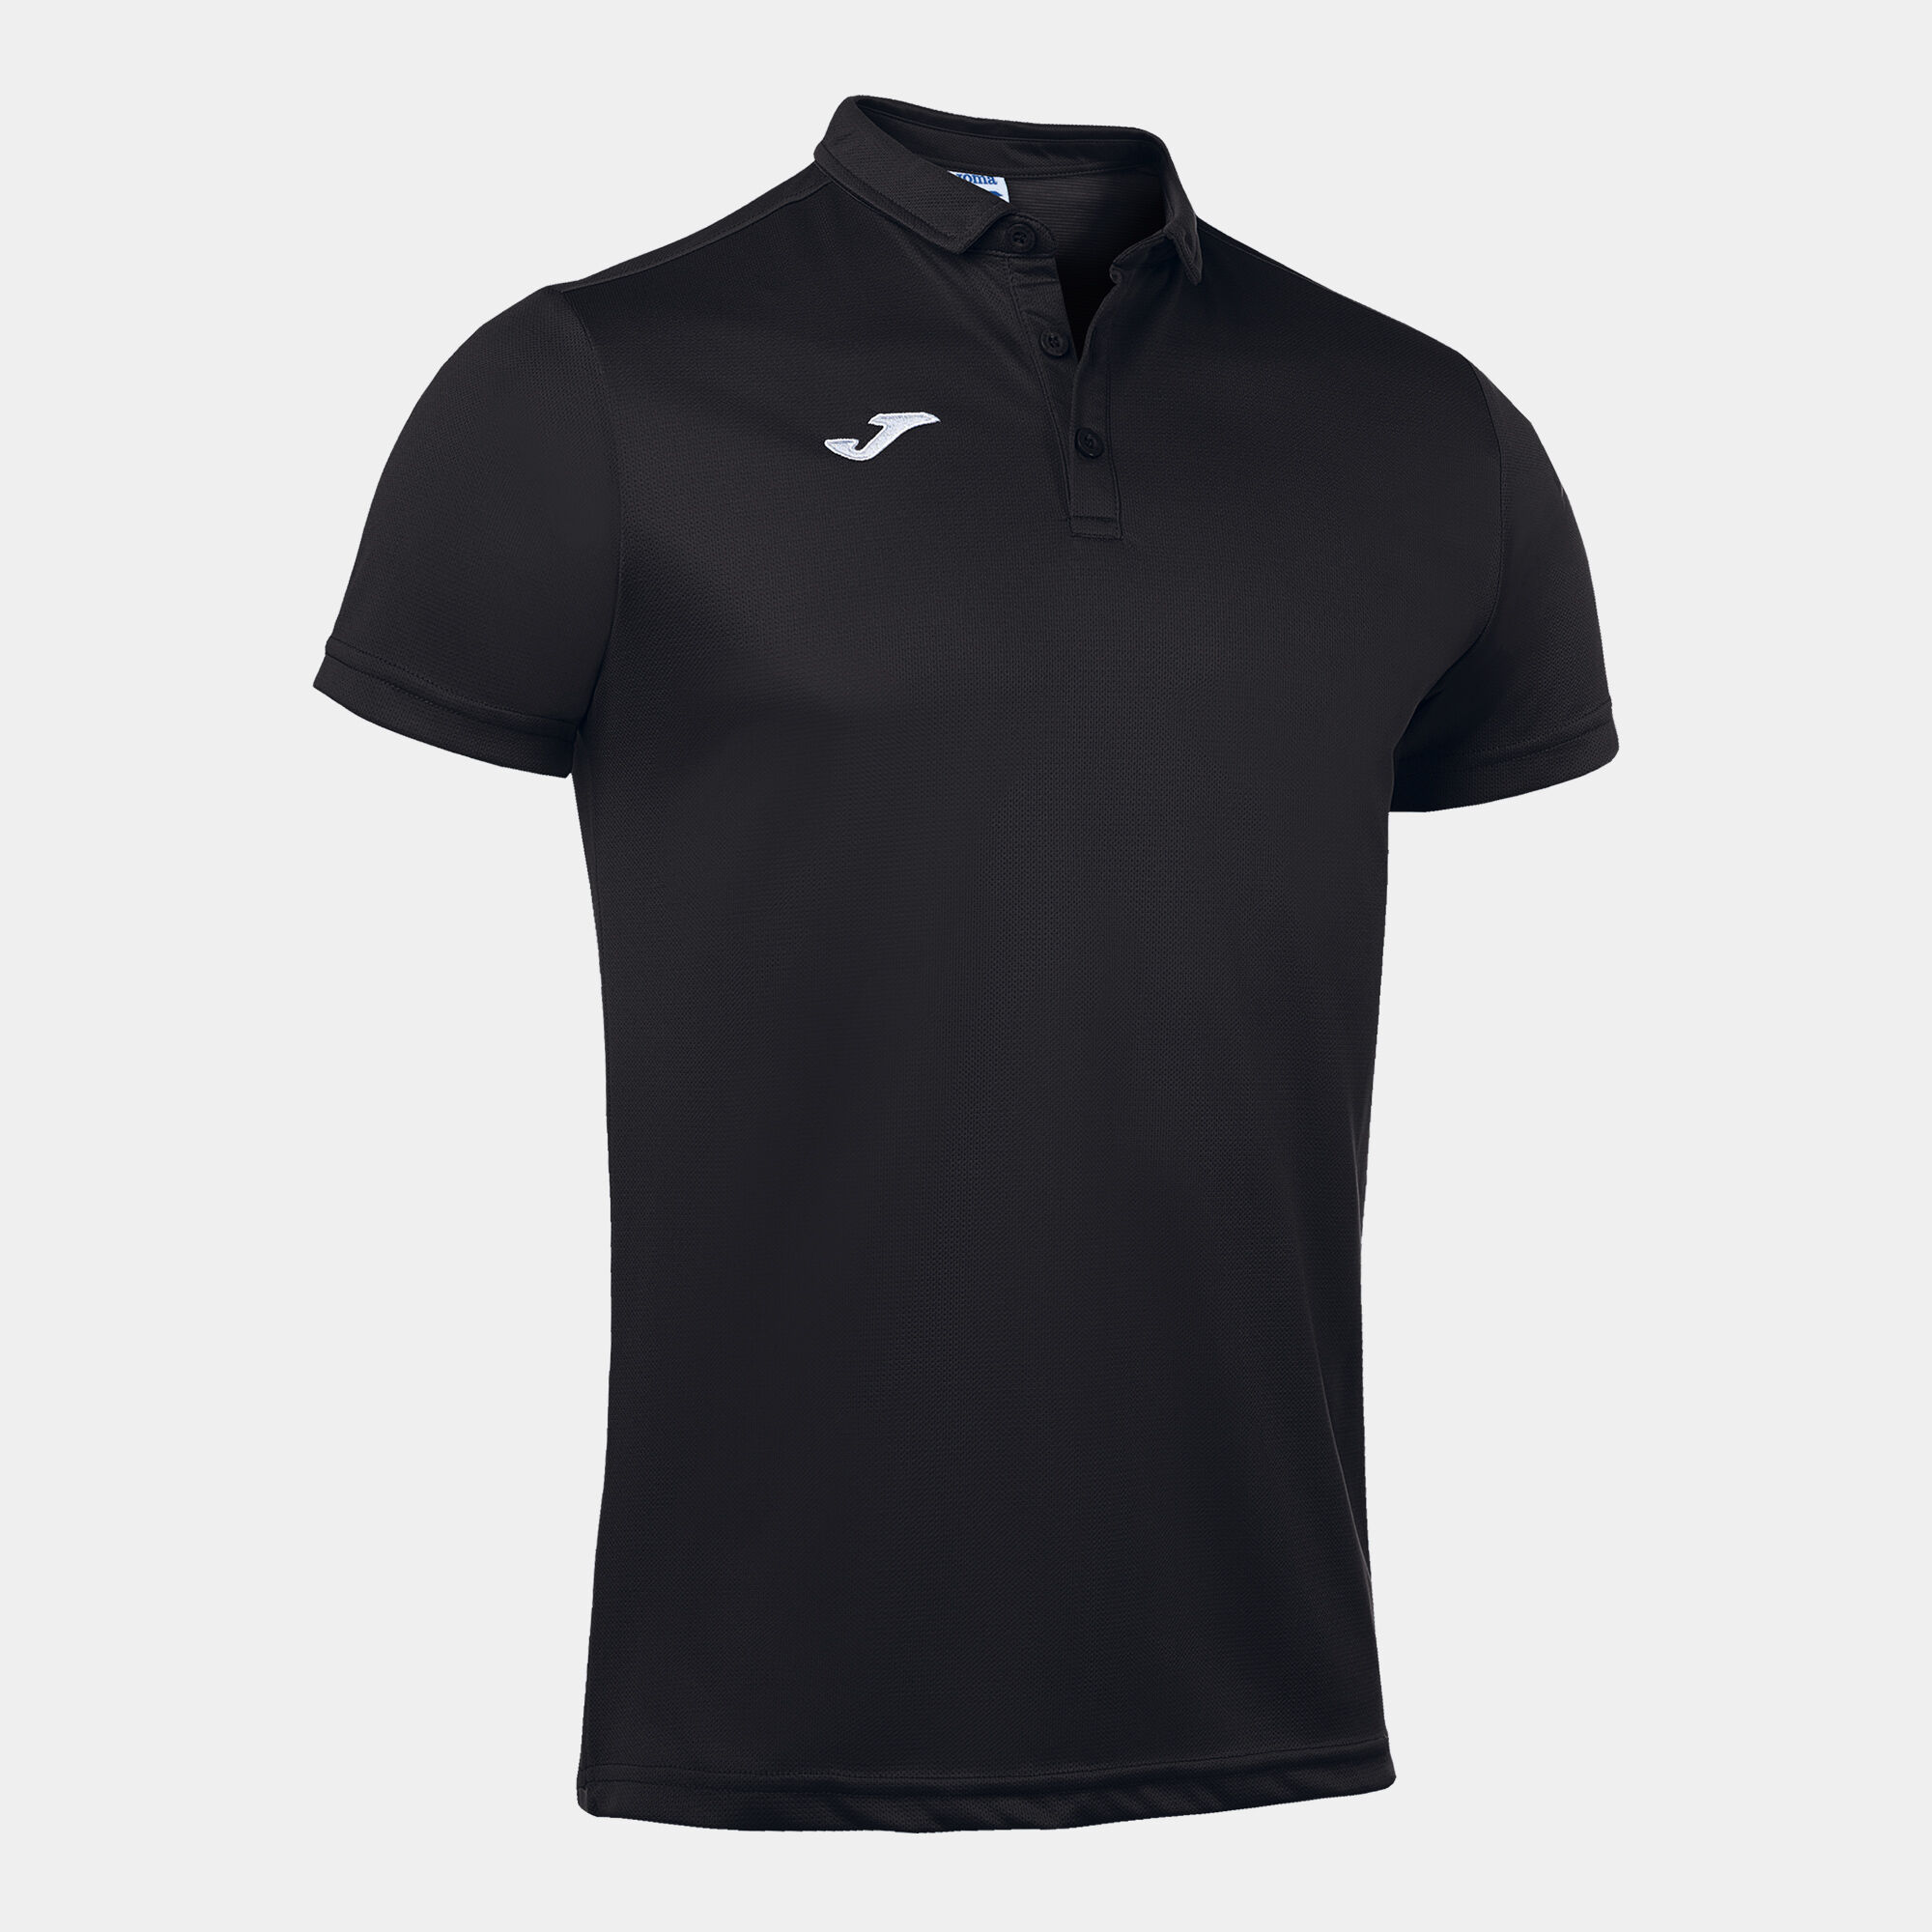 Goot Rechtdoor milieu Polo shirt short-sleeve man Hobby black | JOMA®